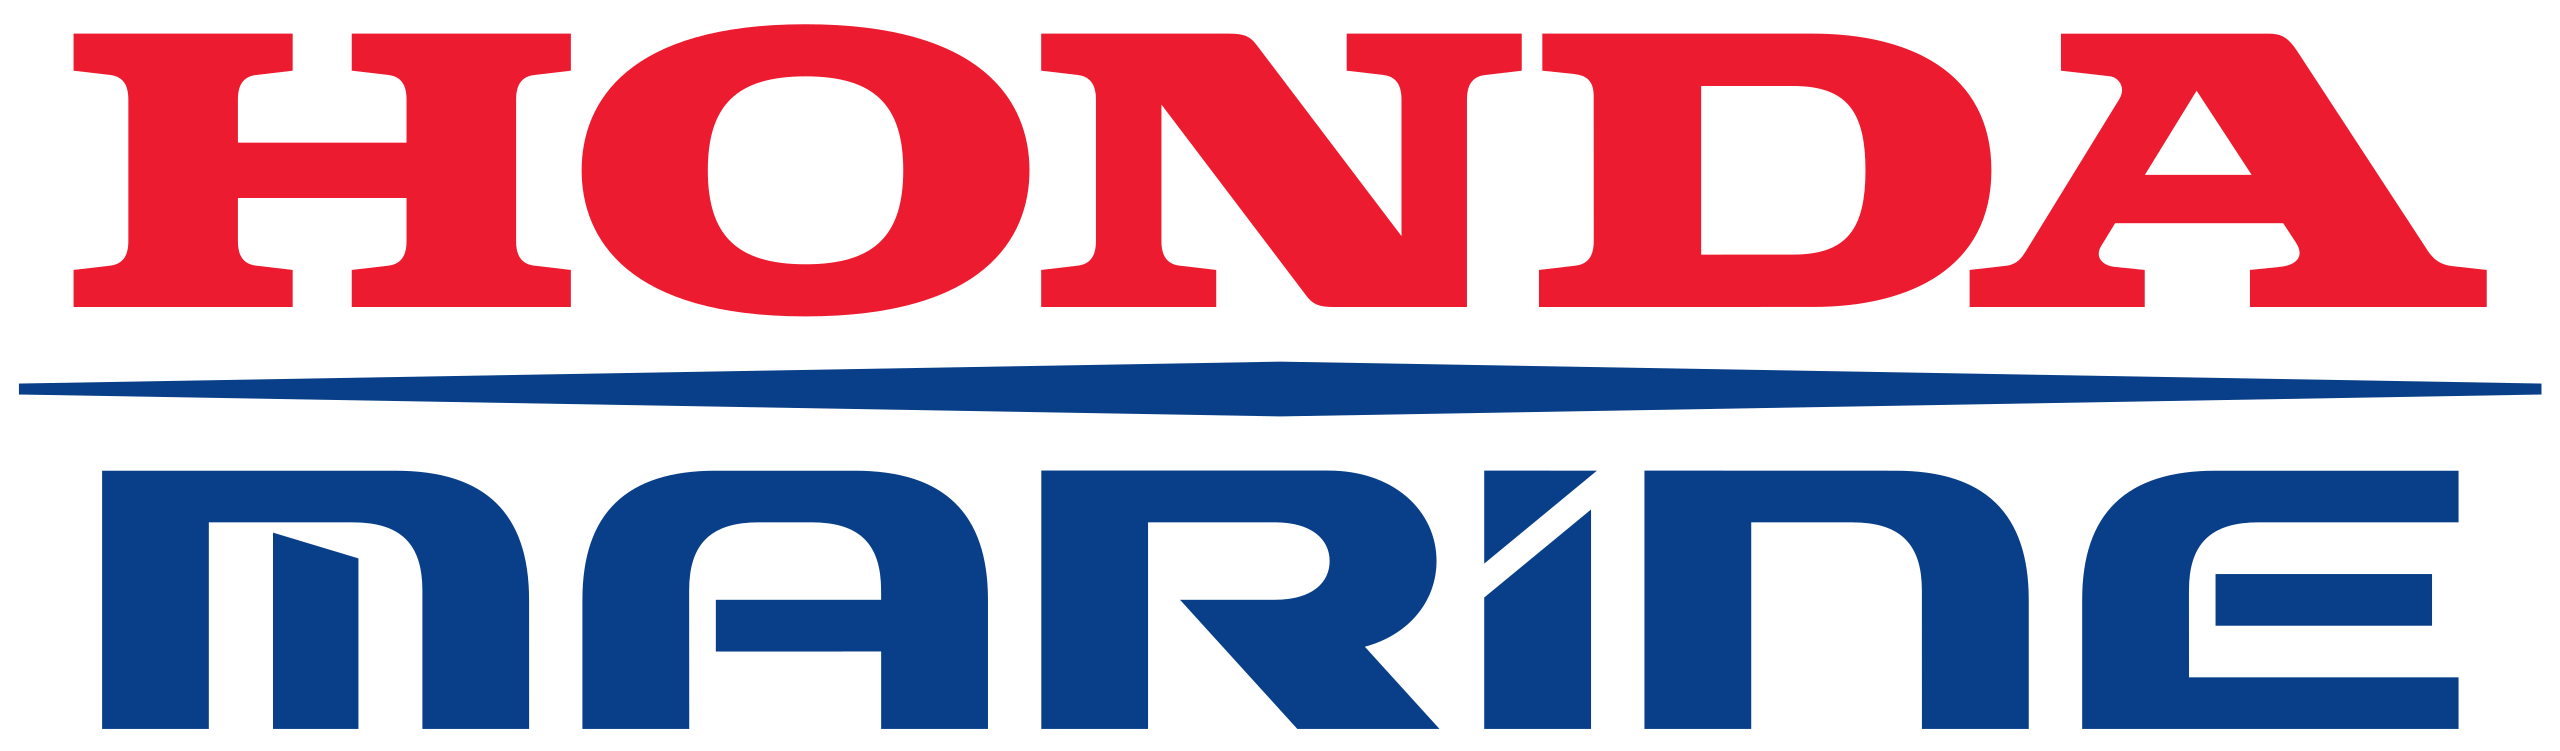 honda-marine-logo.svg.png